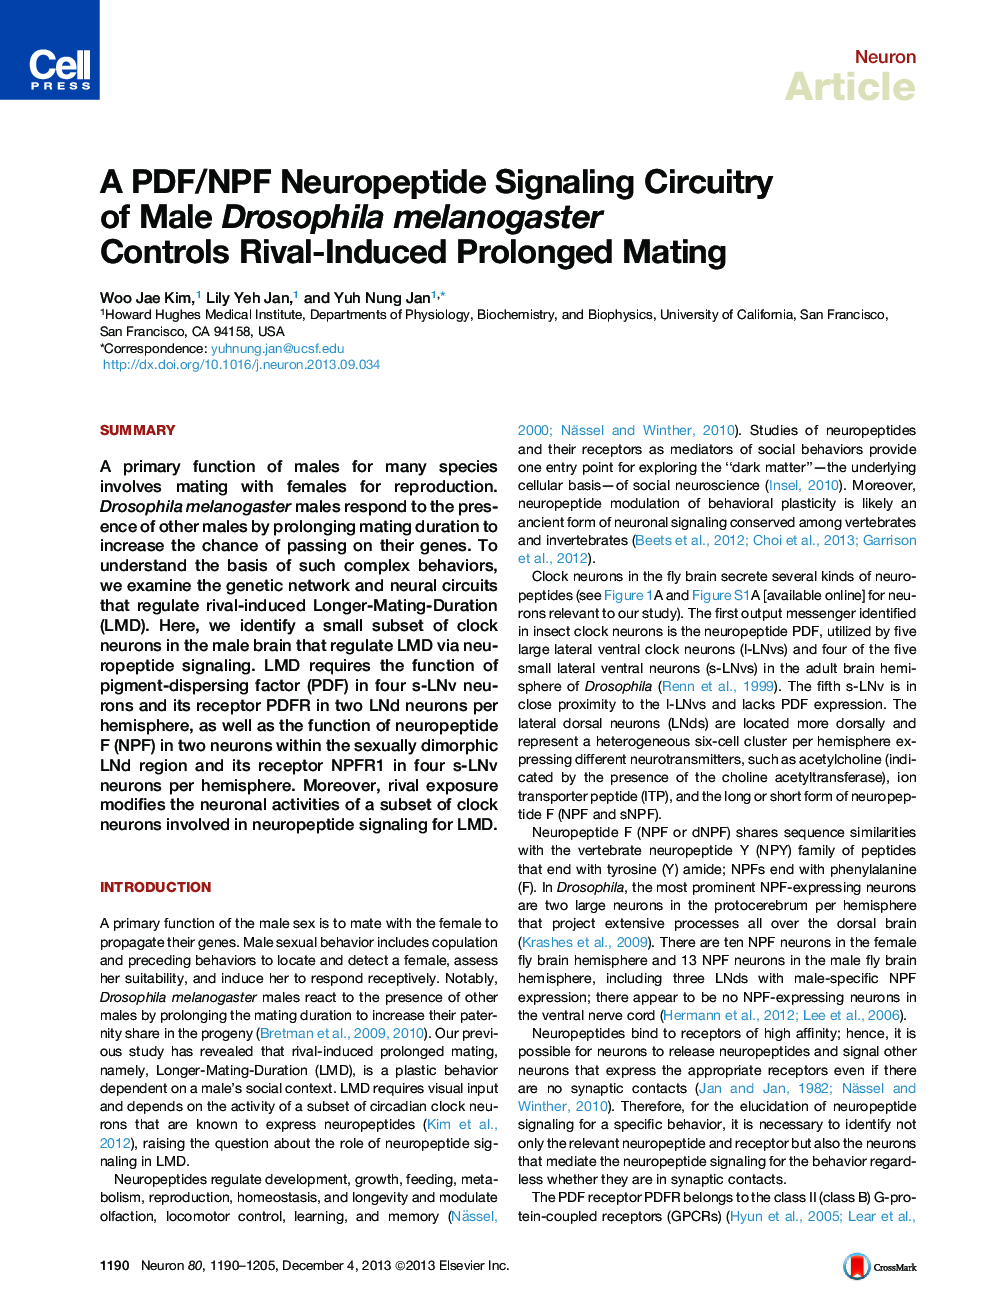 A PDF/NPF Neuropeptide Signaling Circuitry of Male Drosophila melanogaster Controls Rival-Induced Prolonged Mating